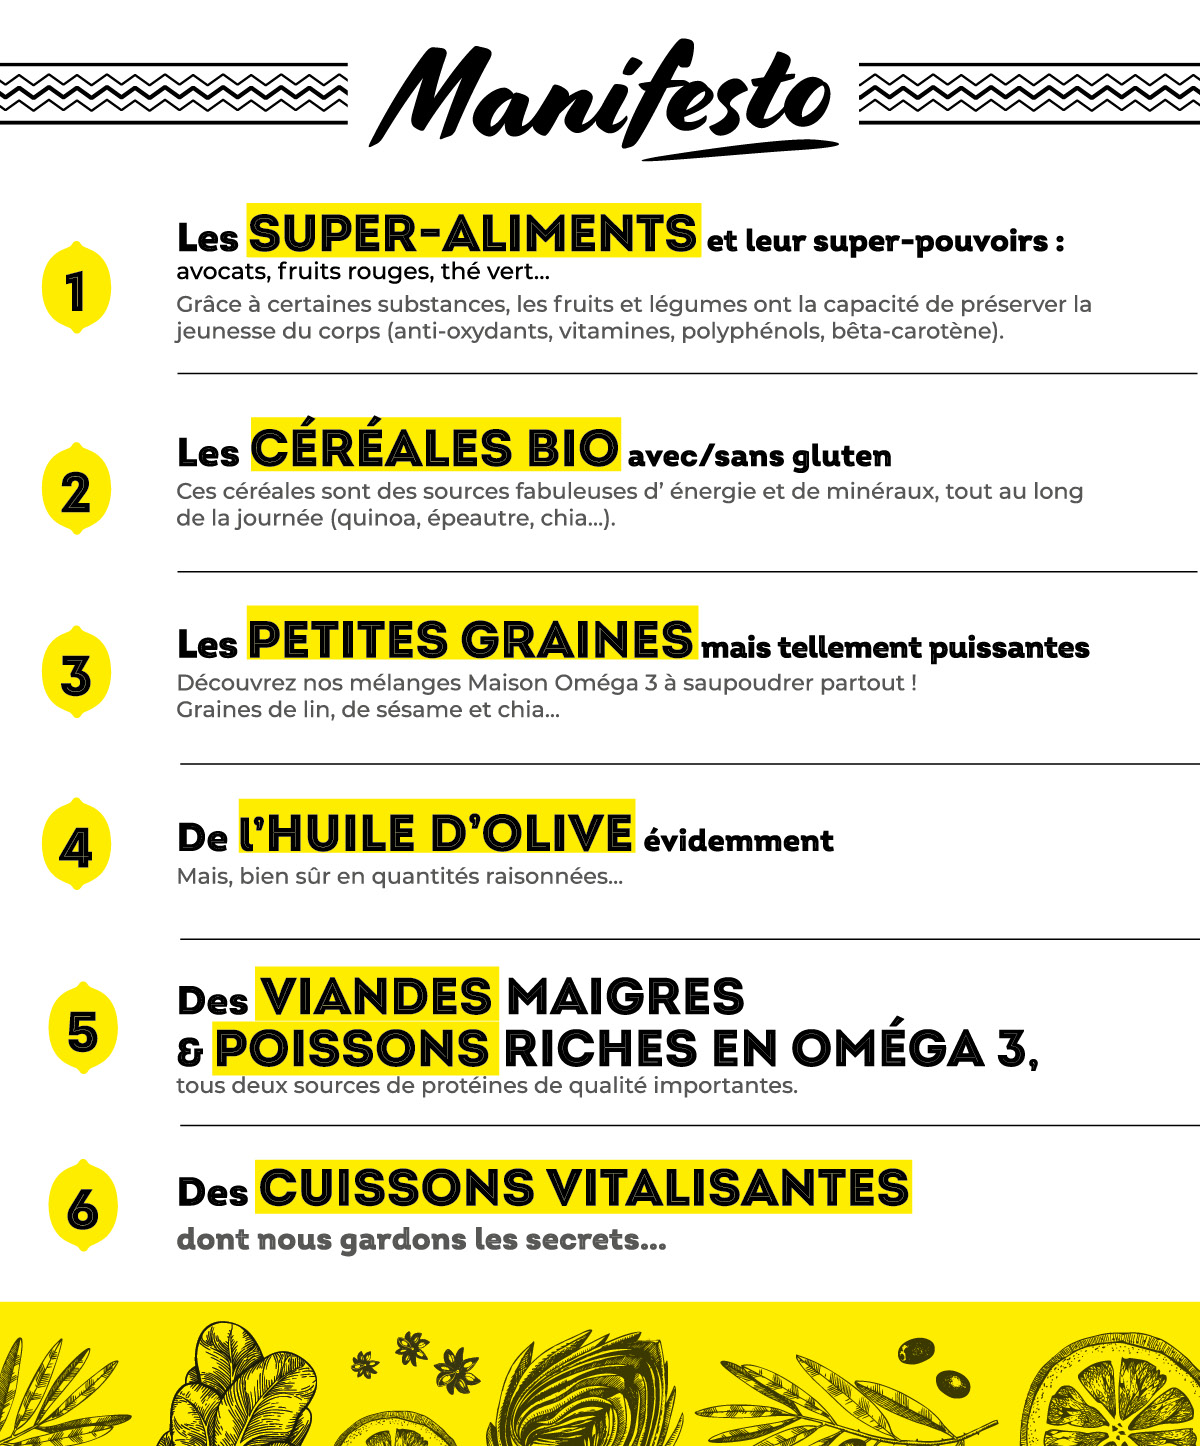 Manifesto restaurants Lémoni paris